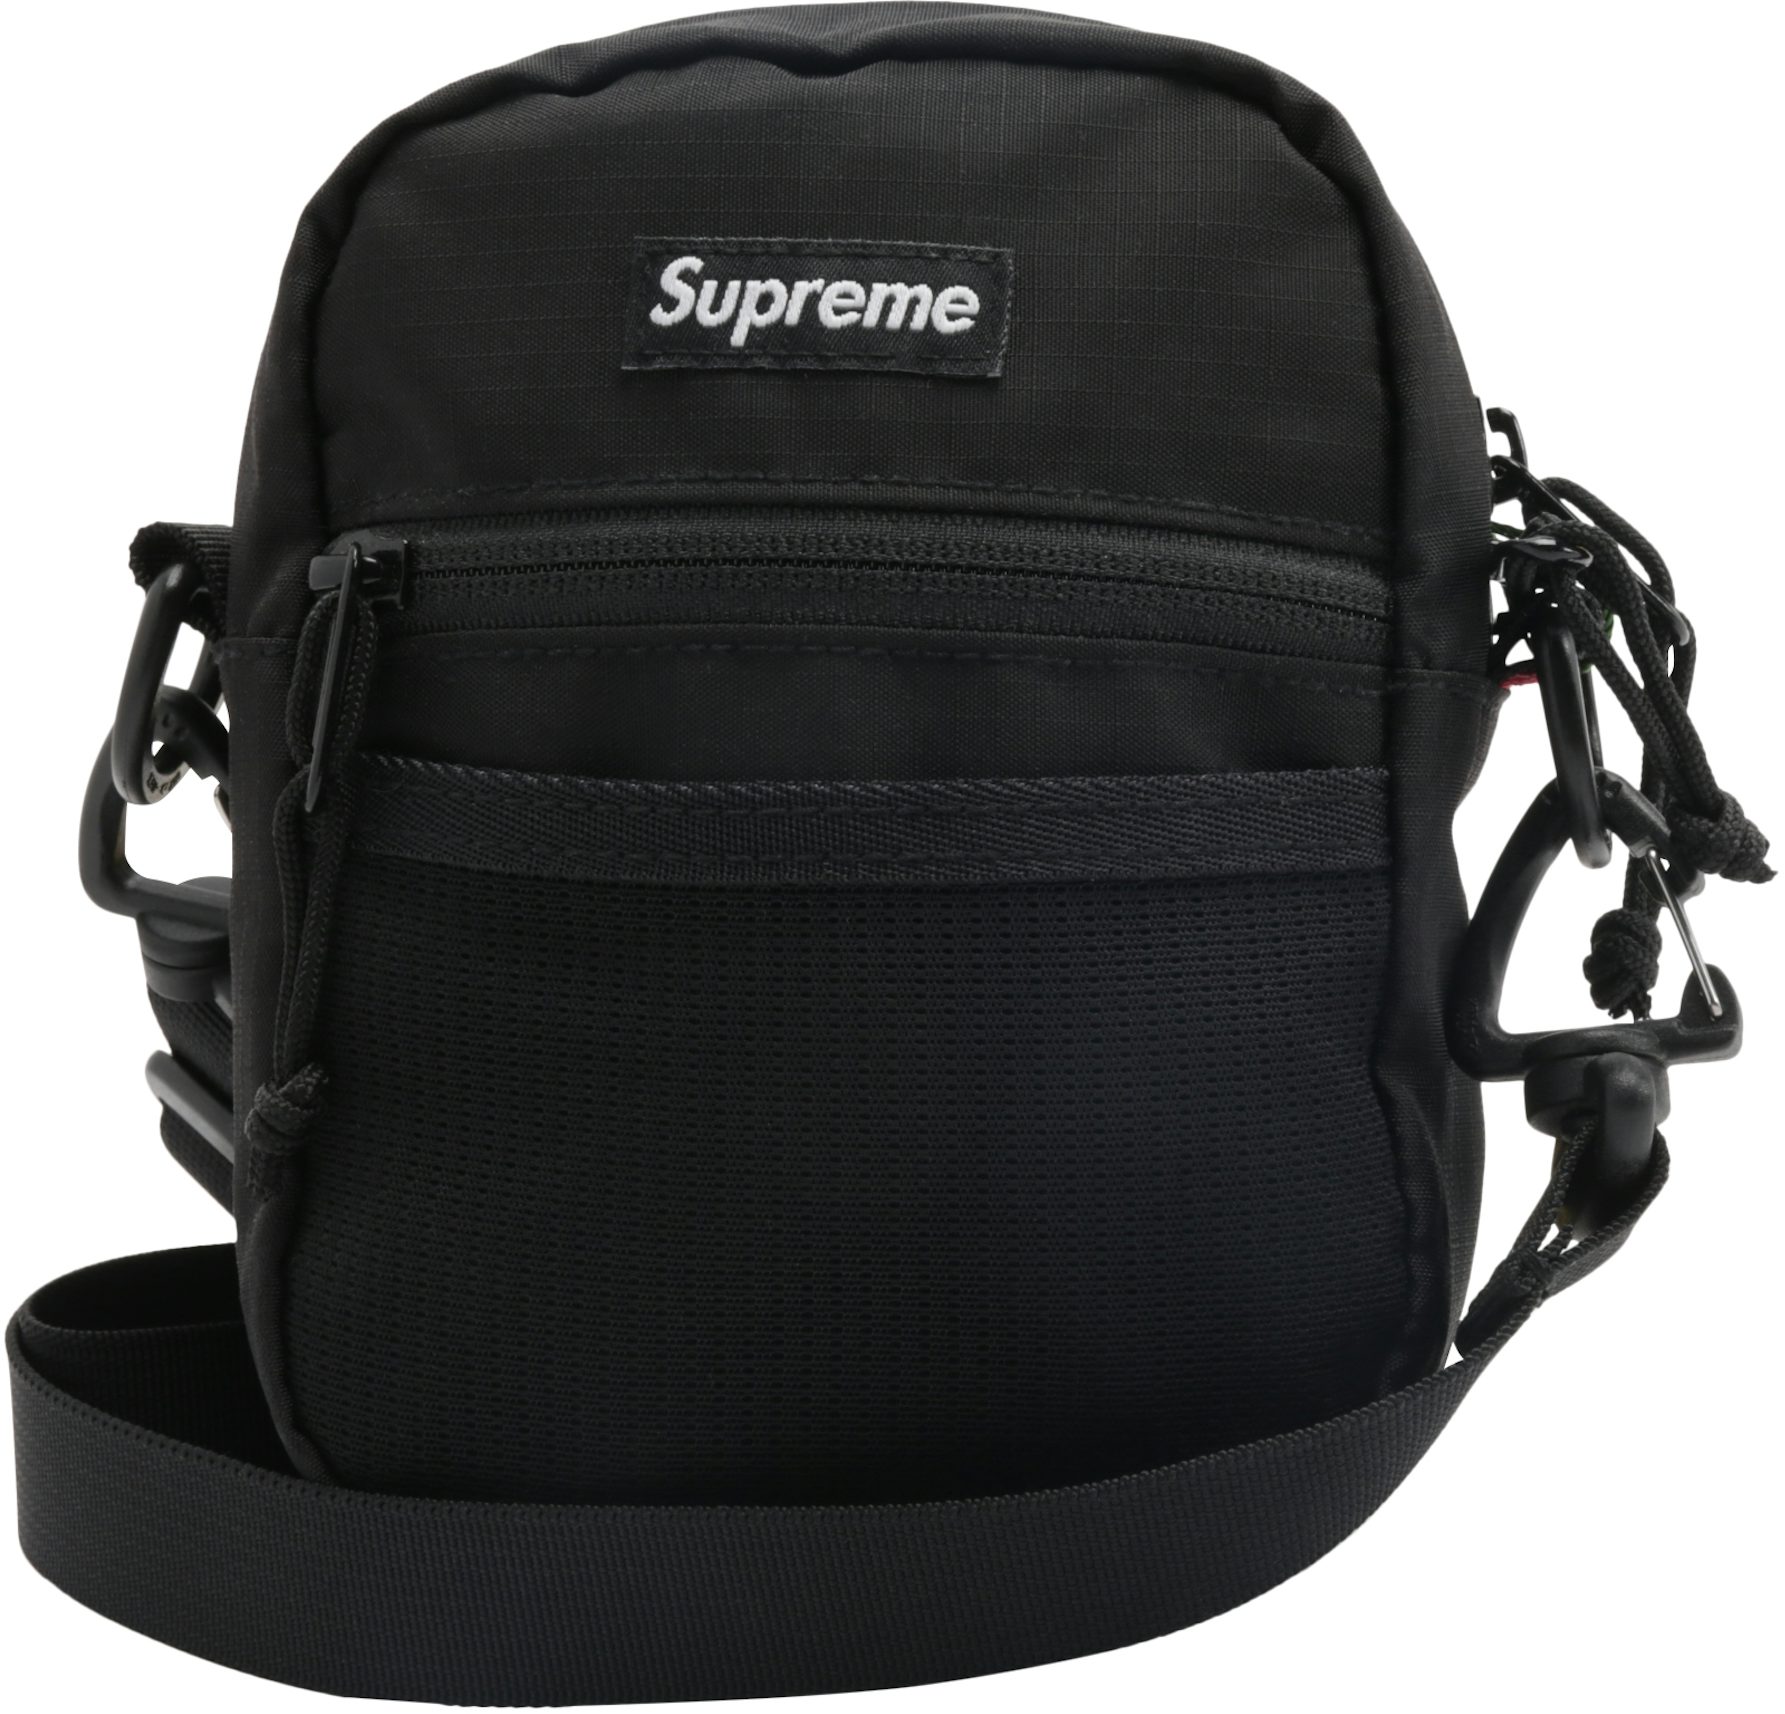 Supreme Duffle Bag SS 22 - Black